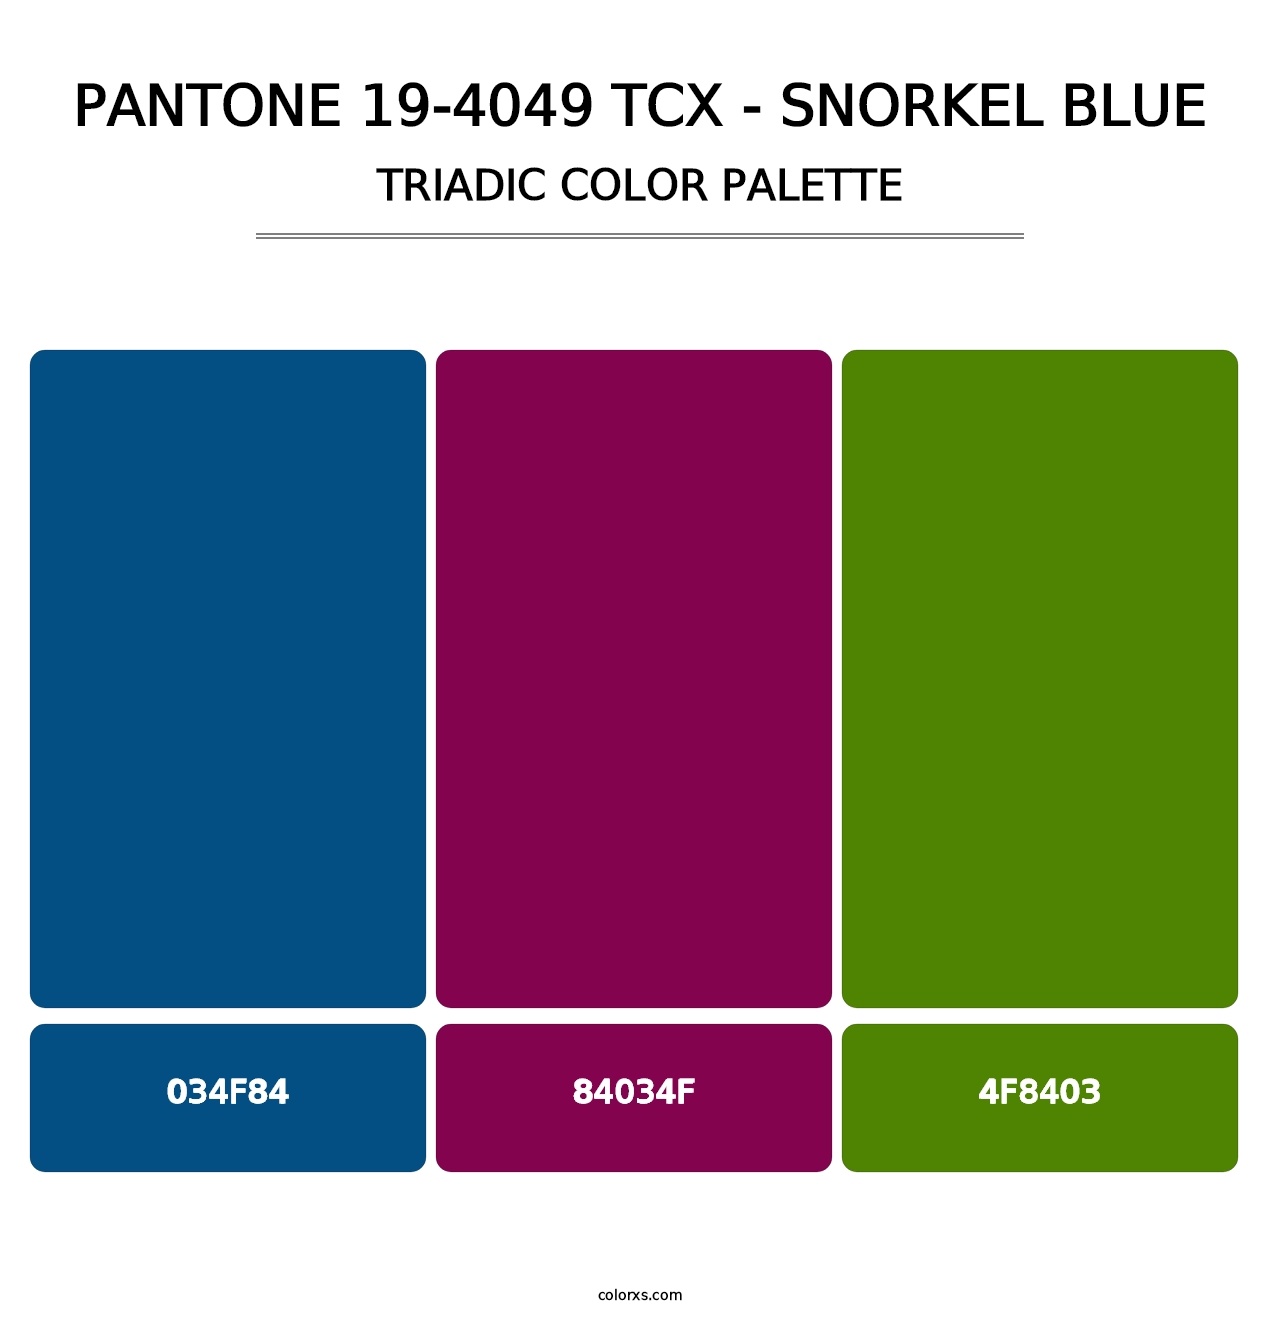 PANTONE 19-4049 TCX - Snorkel Blue - Triadic Color Palette